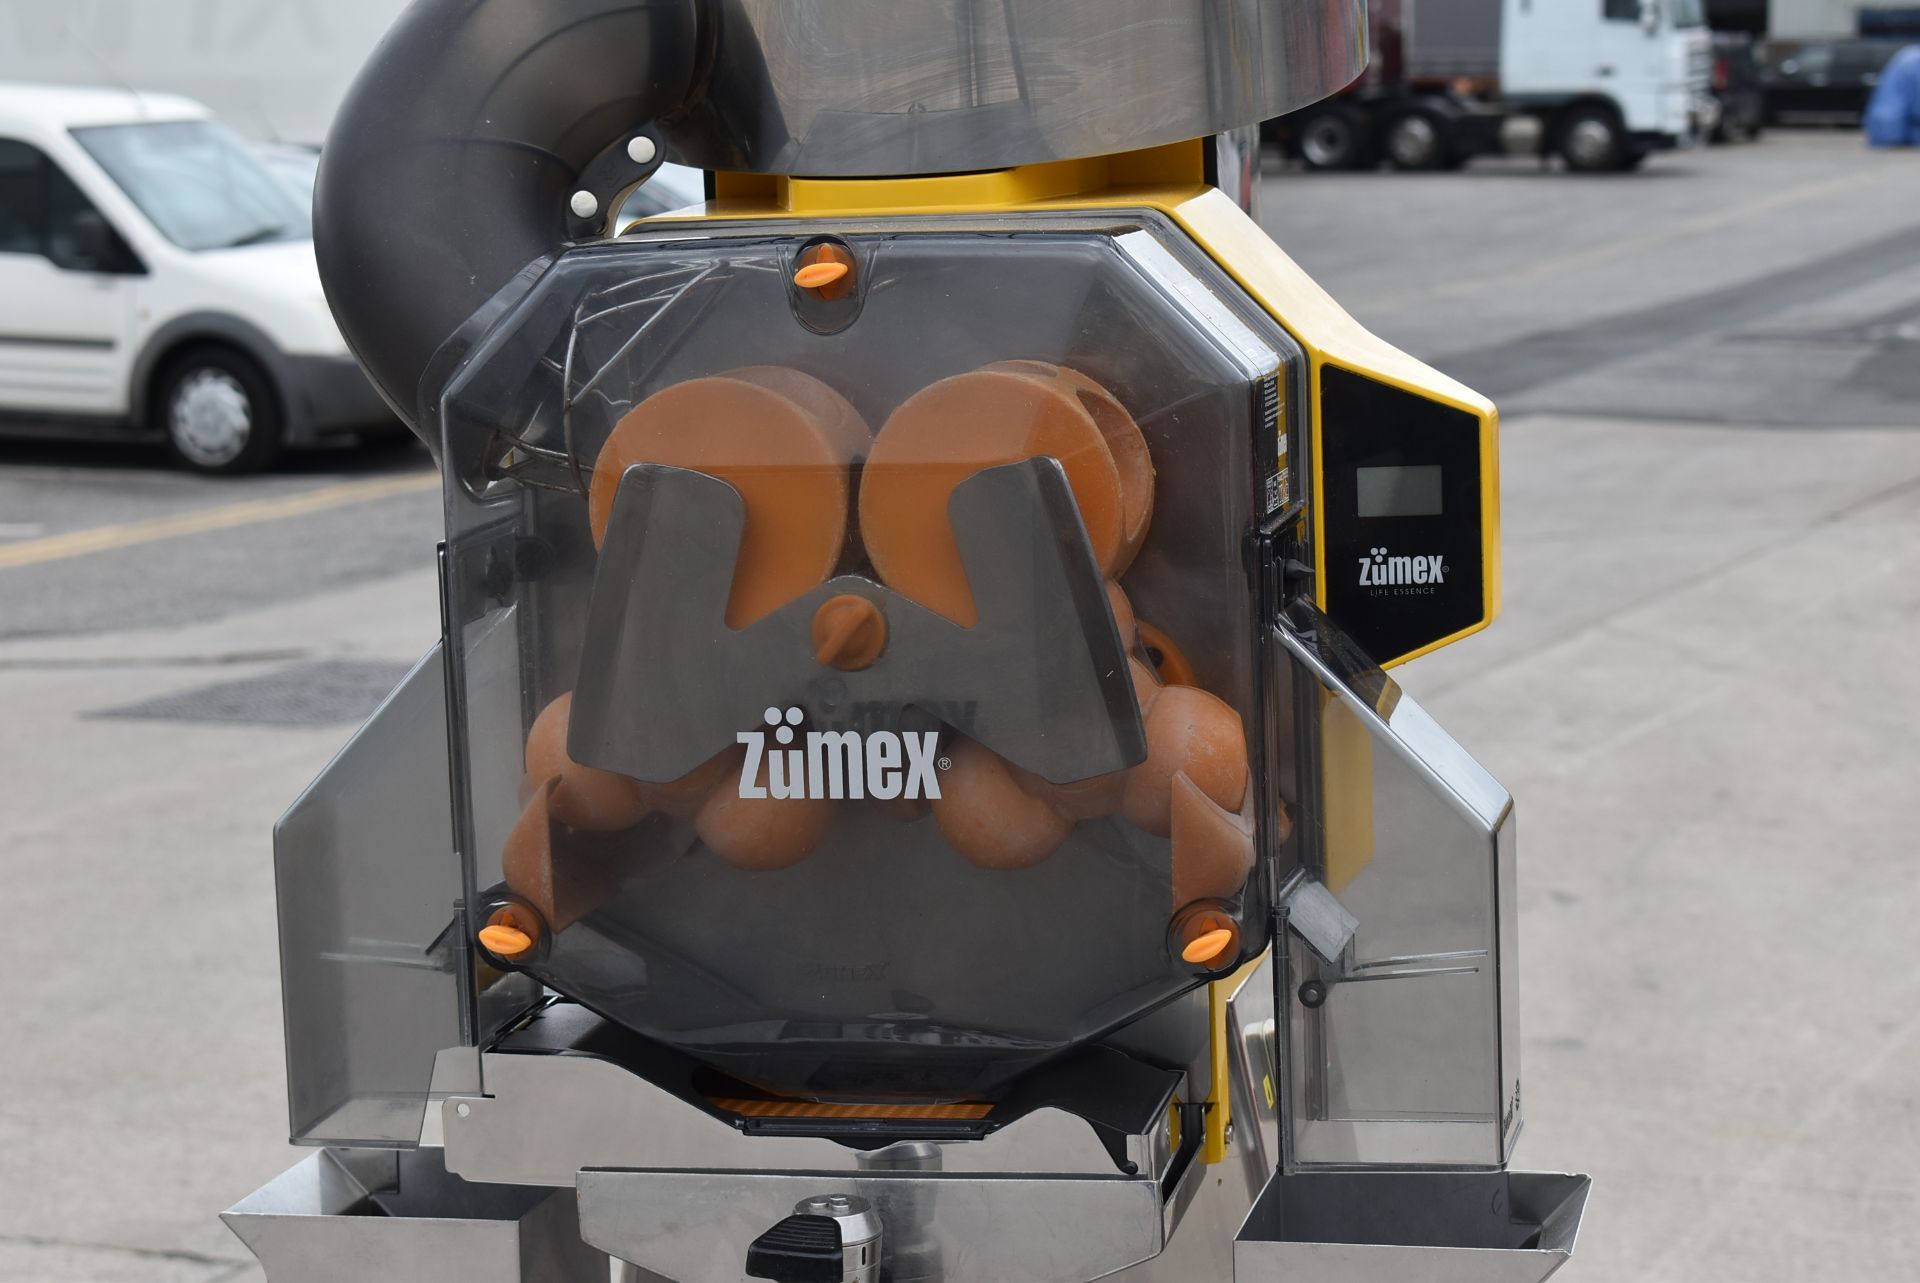 1 x Zumex Speed S +Plus Self-Service Podium Commercial Citrus Juicer - Manufactured in 2018 - - Image 2 of 6